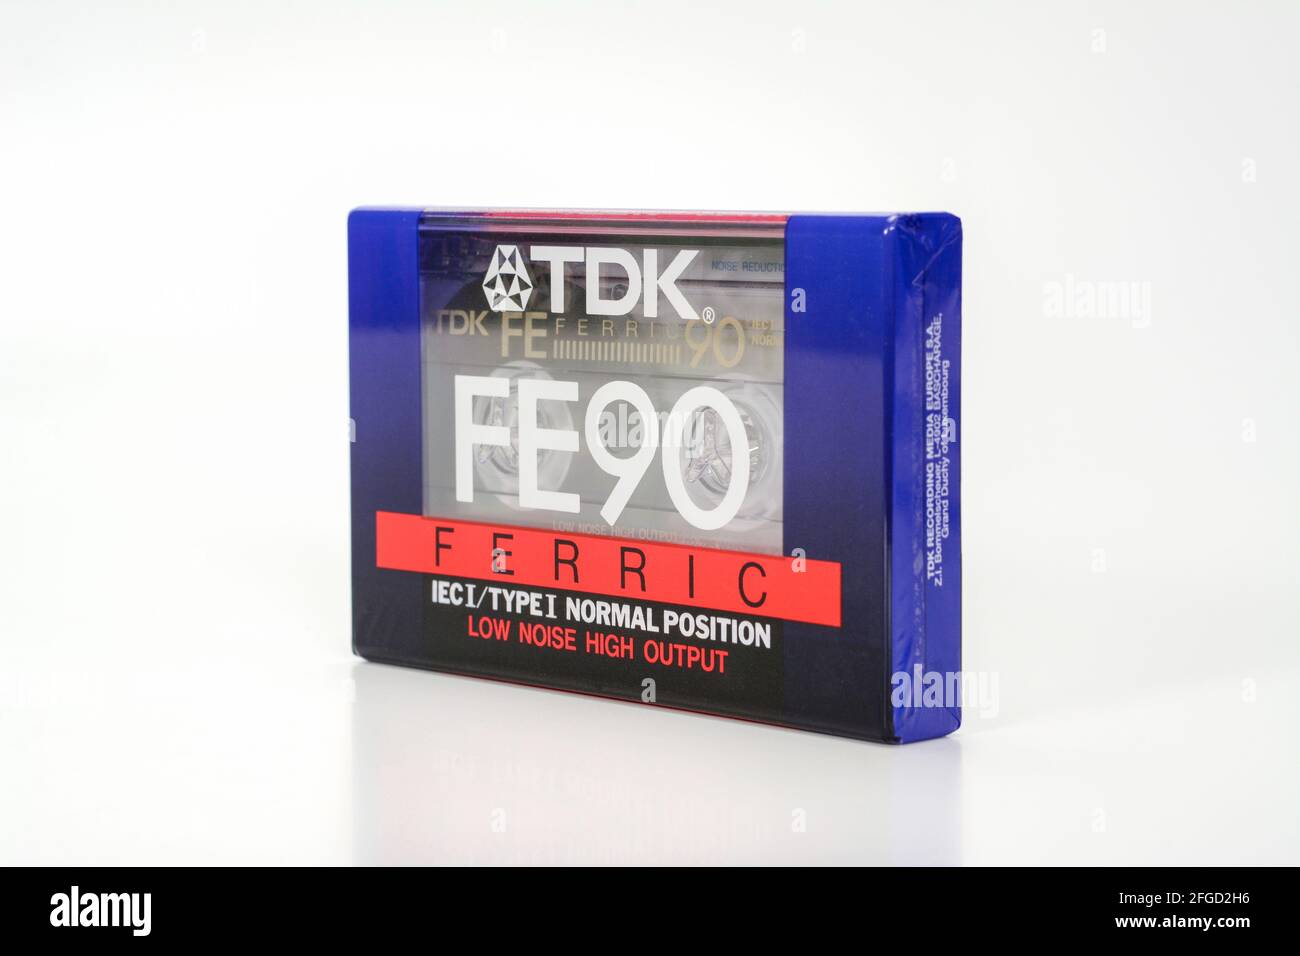 PRAGUE, CZECH REPUBLIC - NOVEMBER 29, 2018: Audio compact cassette TDK FE 90 Ferric. Audio cassette on a white background, right view. analog format f Stock Photo